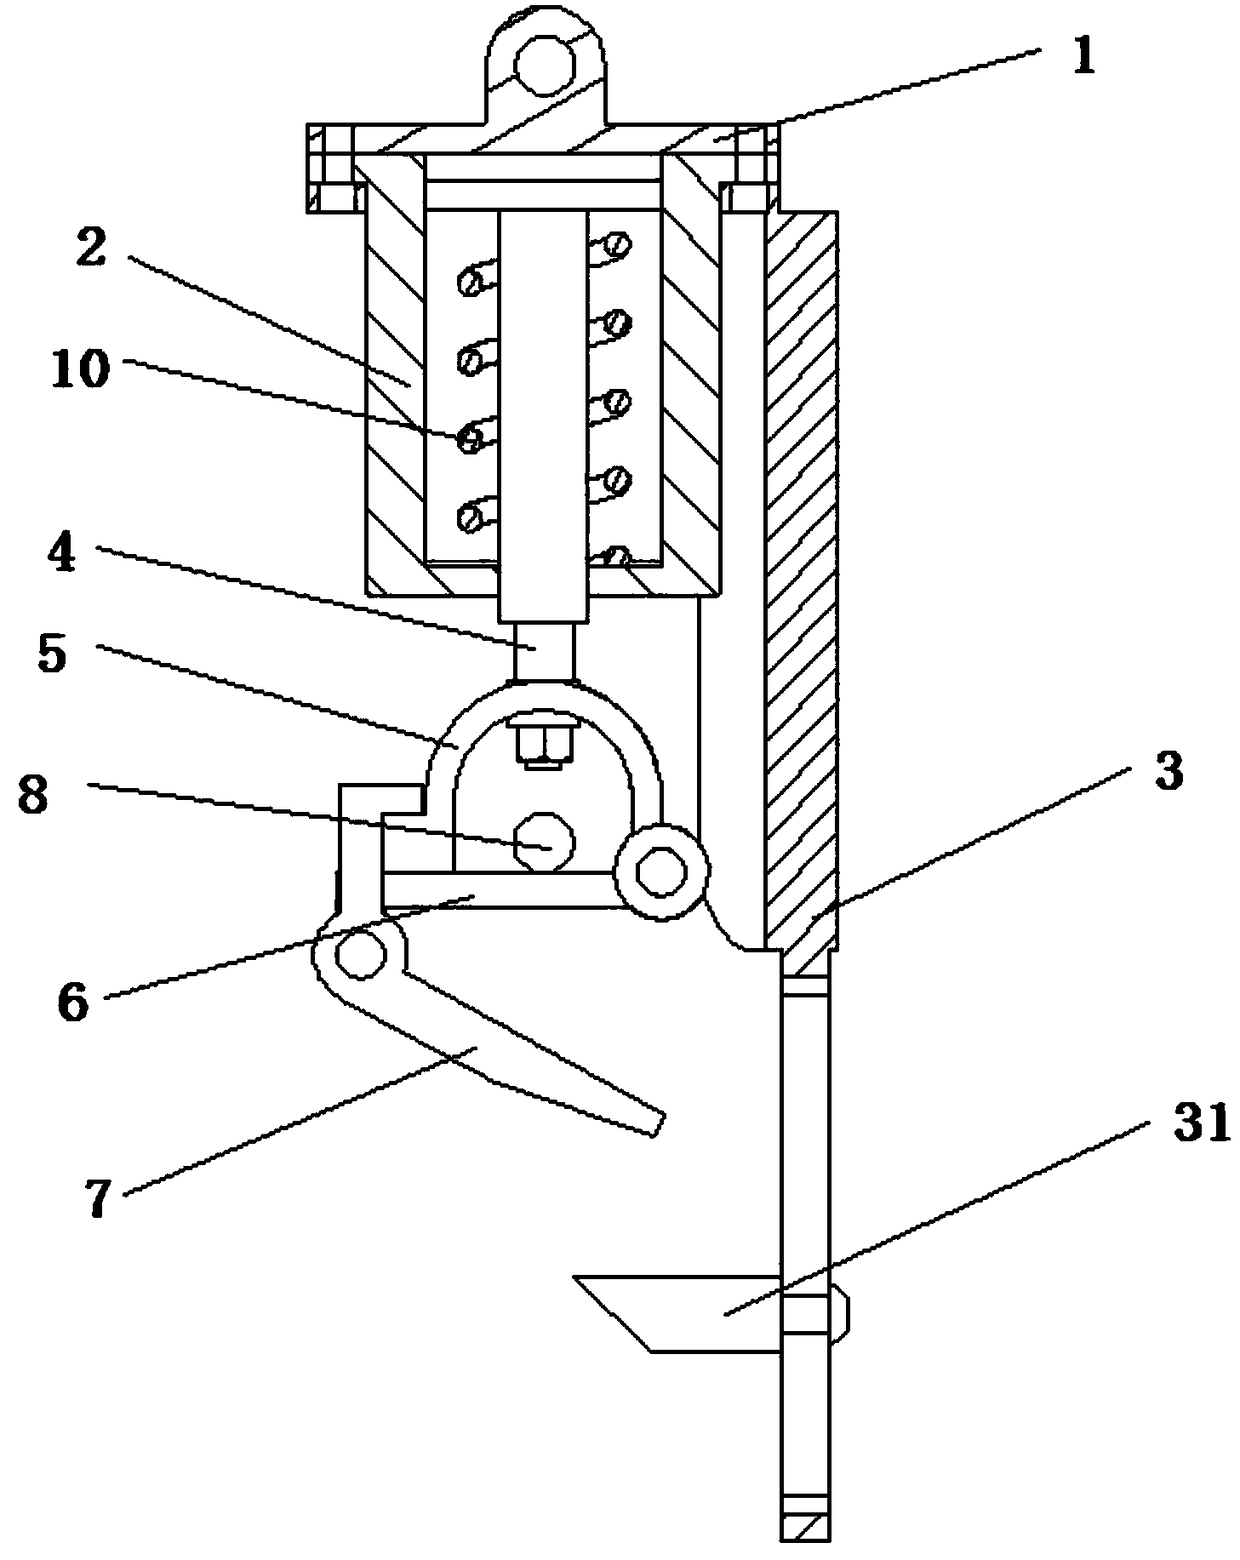 Adjustable power distribution circuit line-abandoning and rod-protecting apparatus